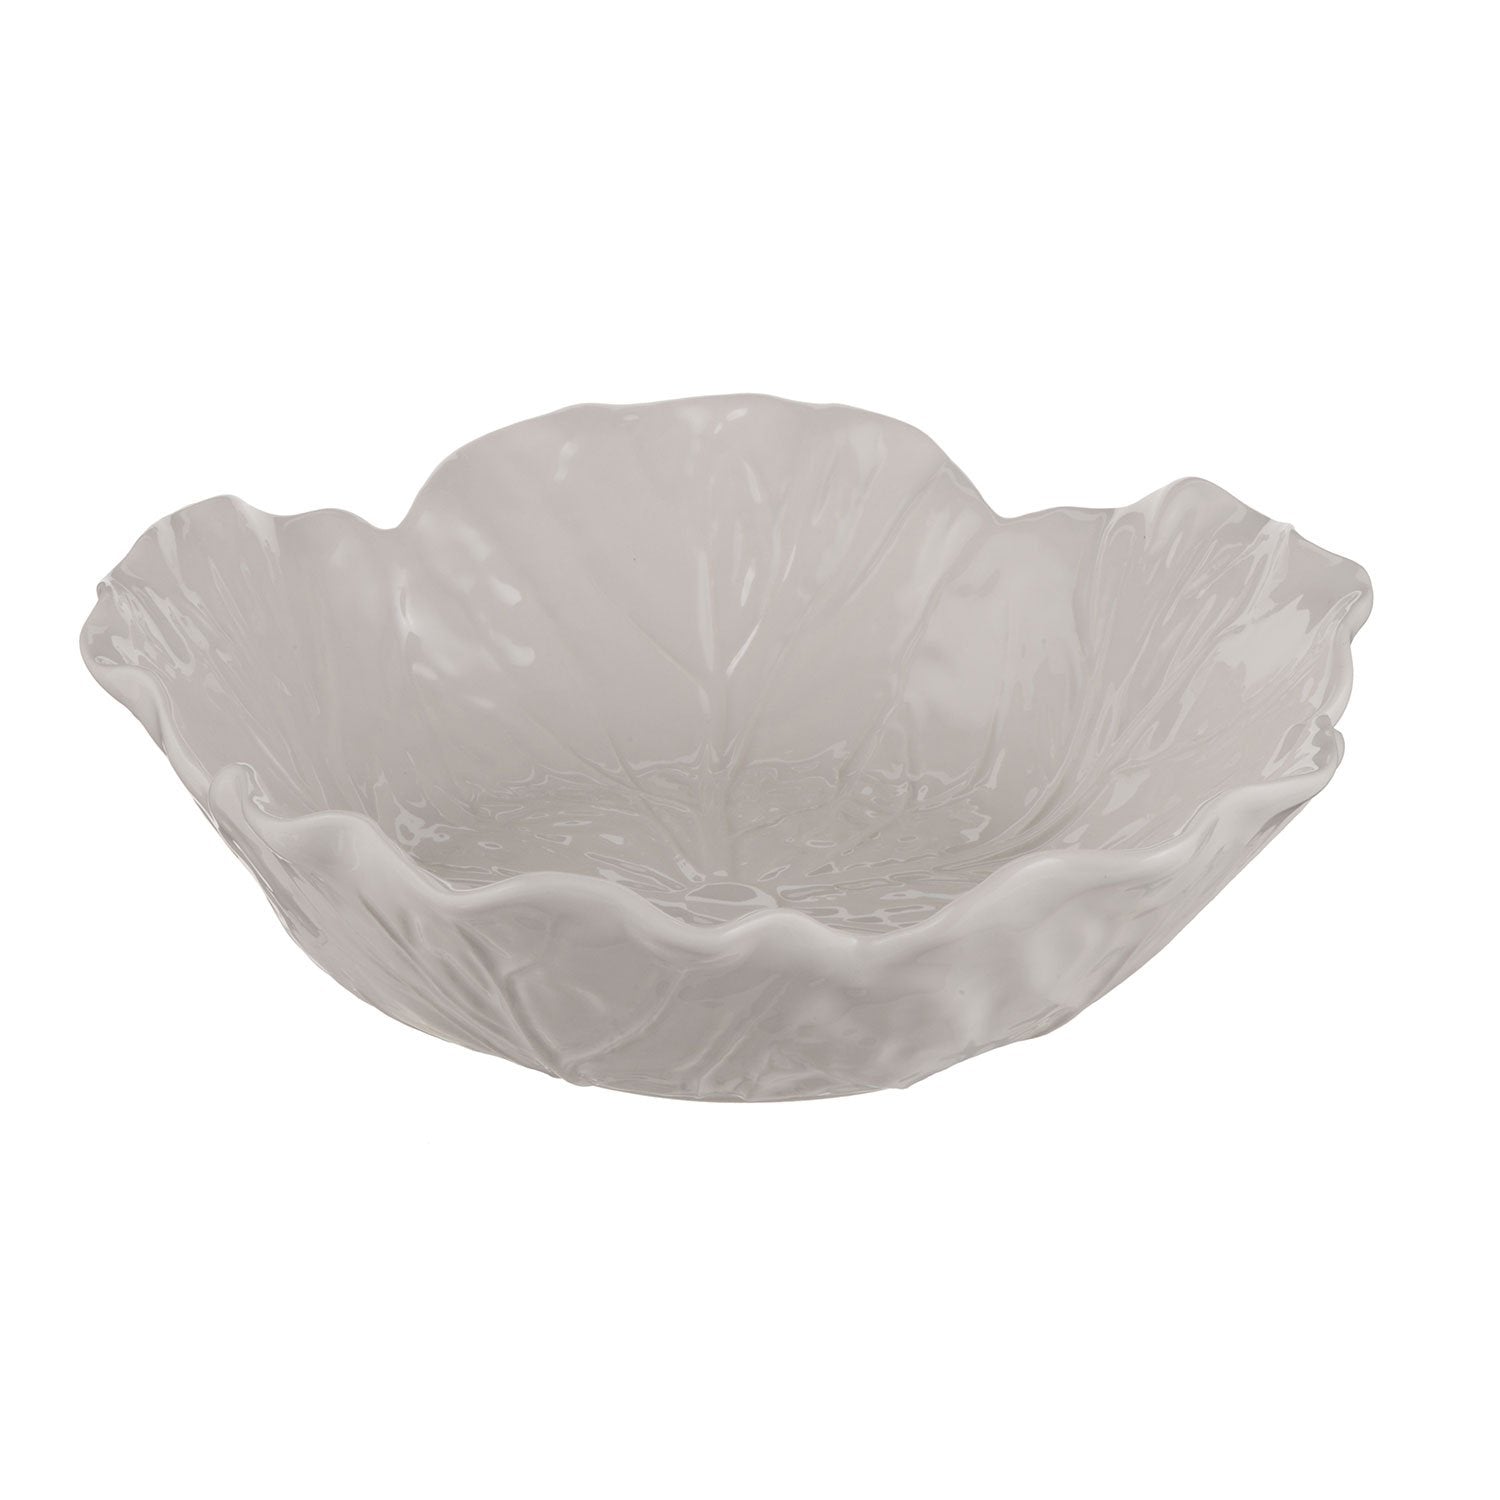 Cabbage Bowl - Medium Ivory 22.5cm